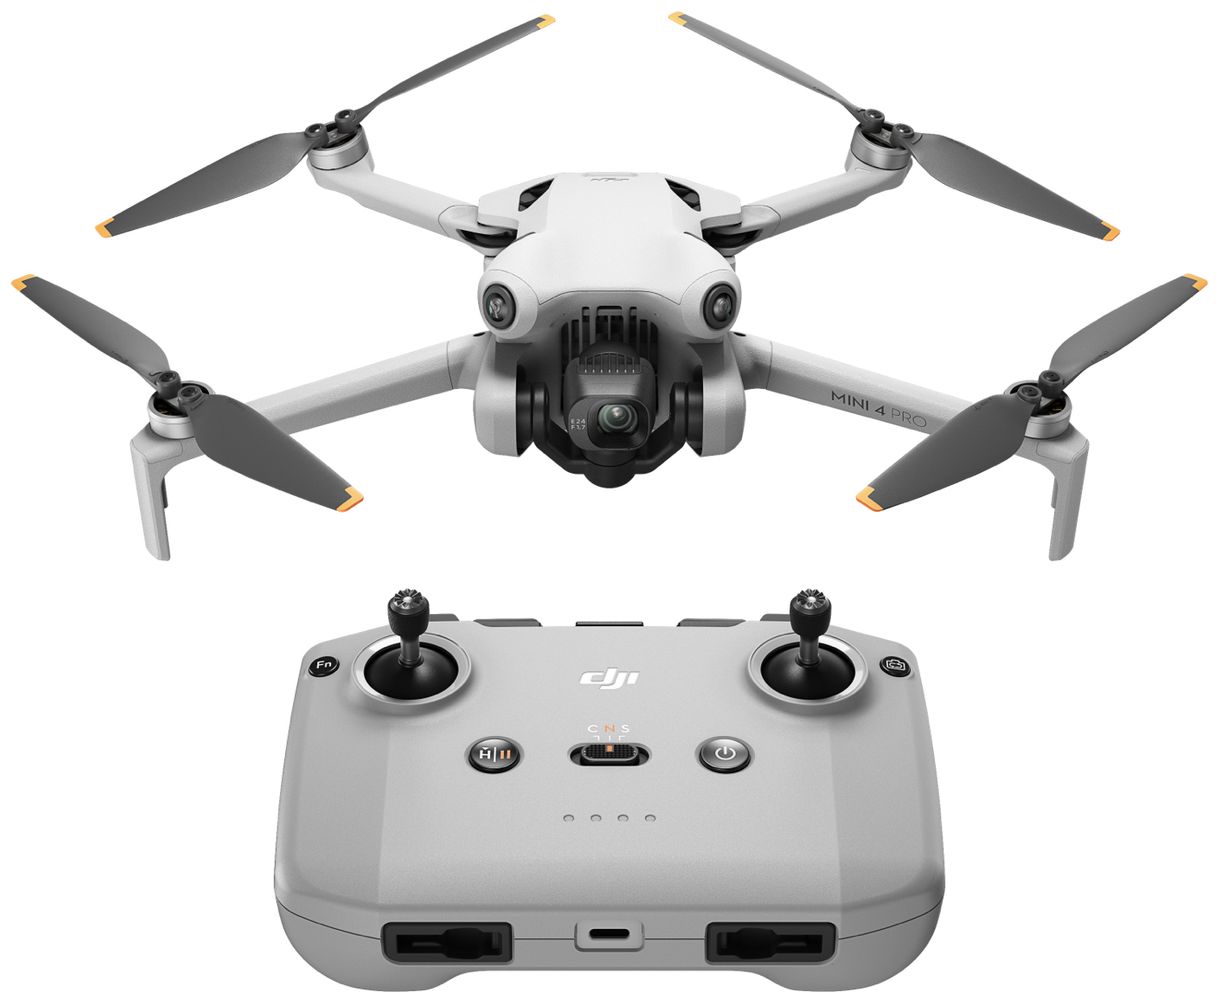 Mini 4 Pro 8064 x 6048 Pixel Quadrocopter Multicopter/Drohne Flugzeit: 34 min (Schwarz, Weiß) 